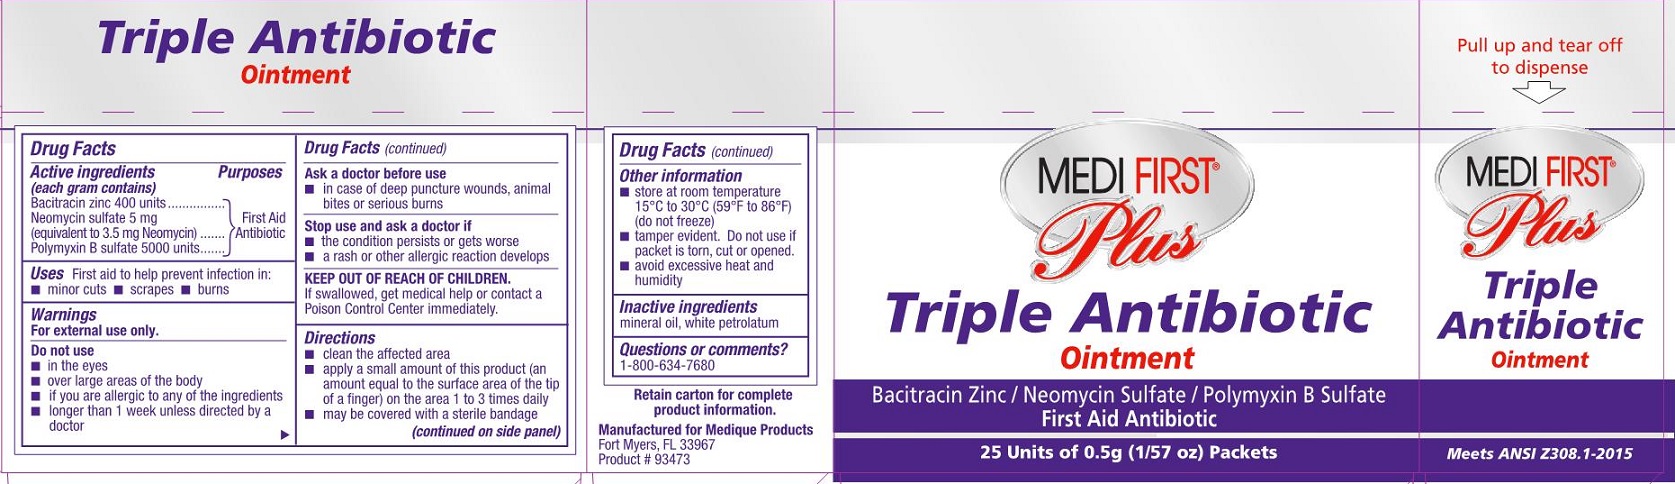 MFP Triple Antibiotic Ultraseal Label